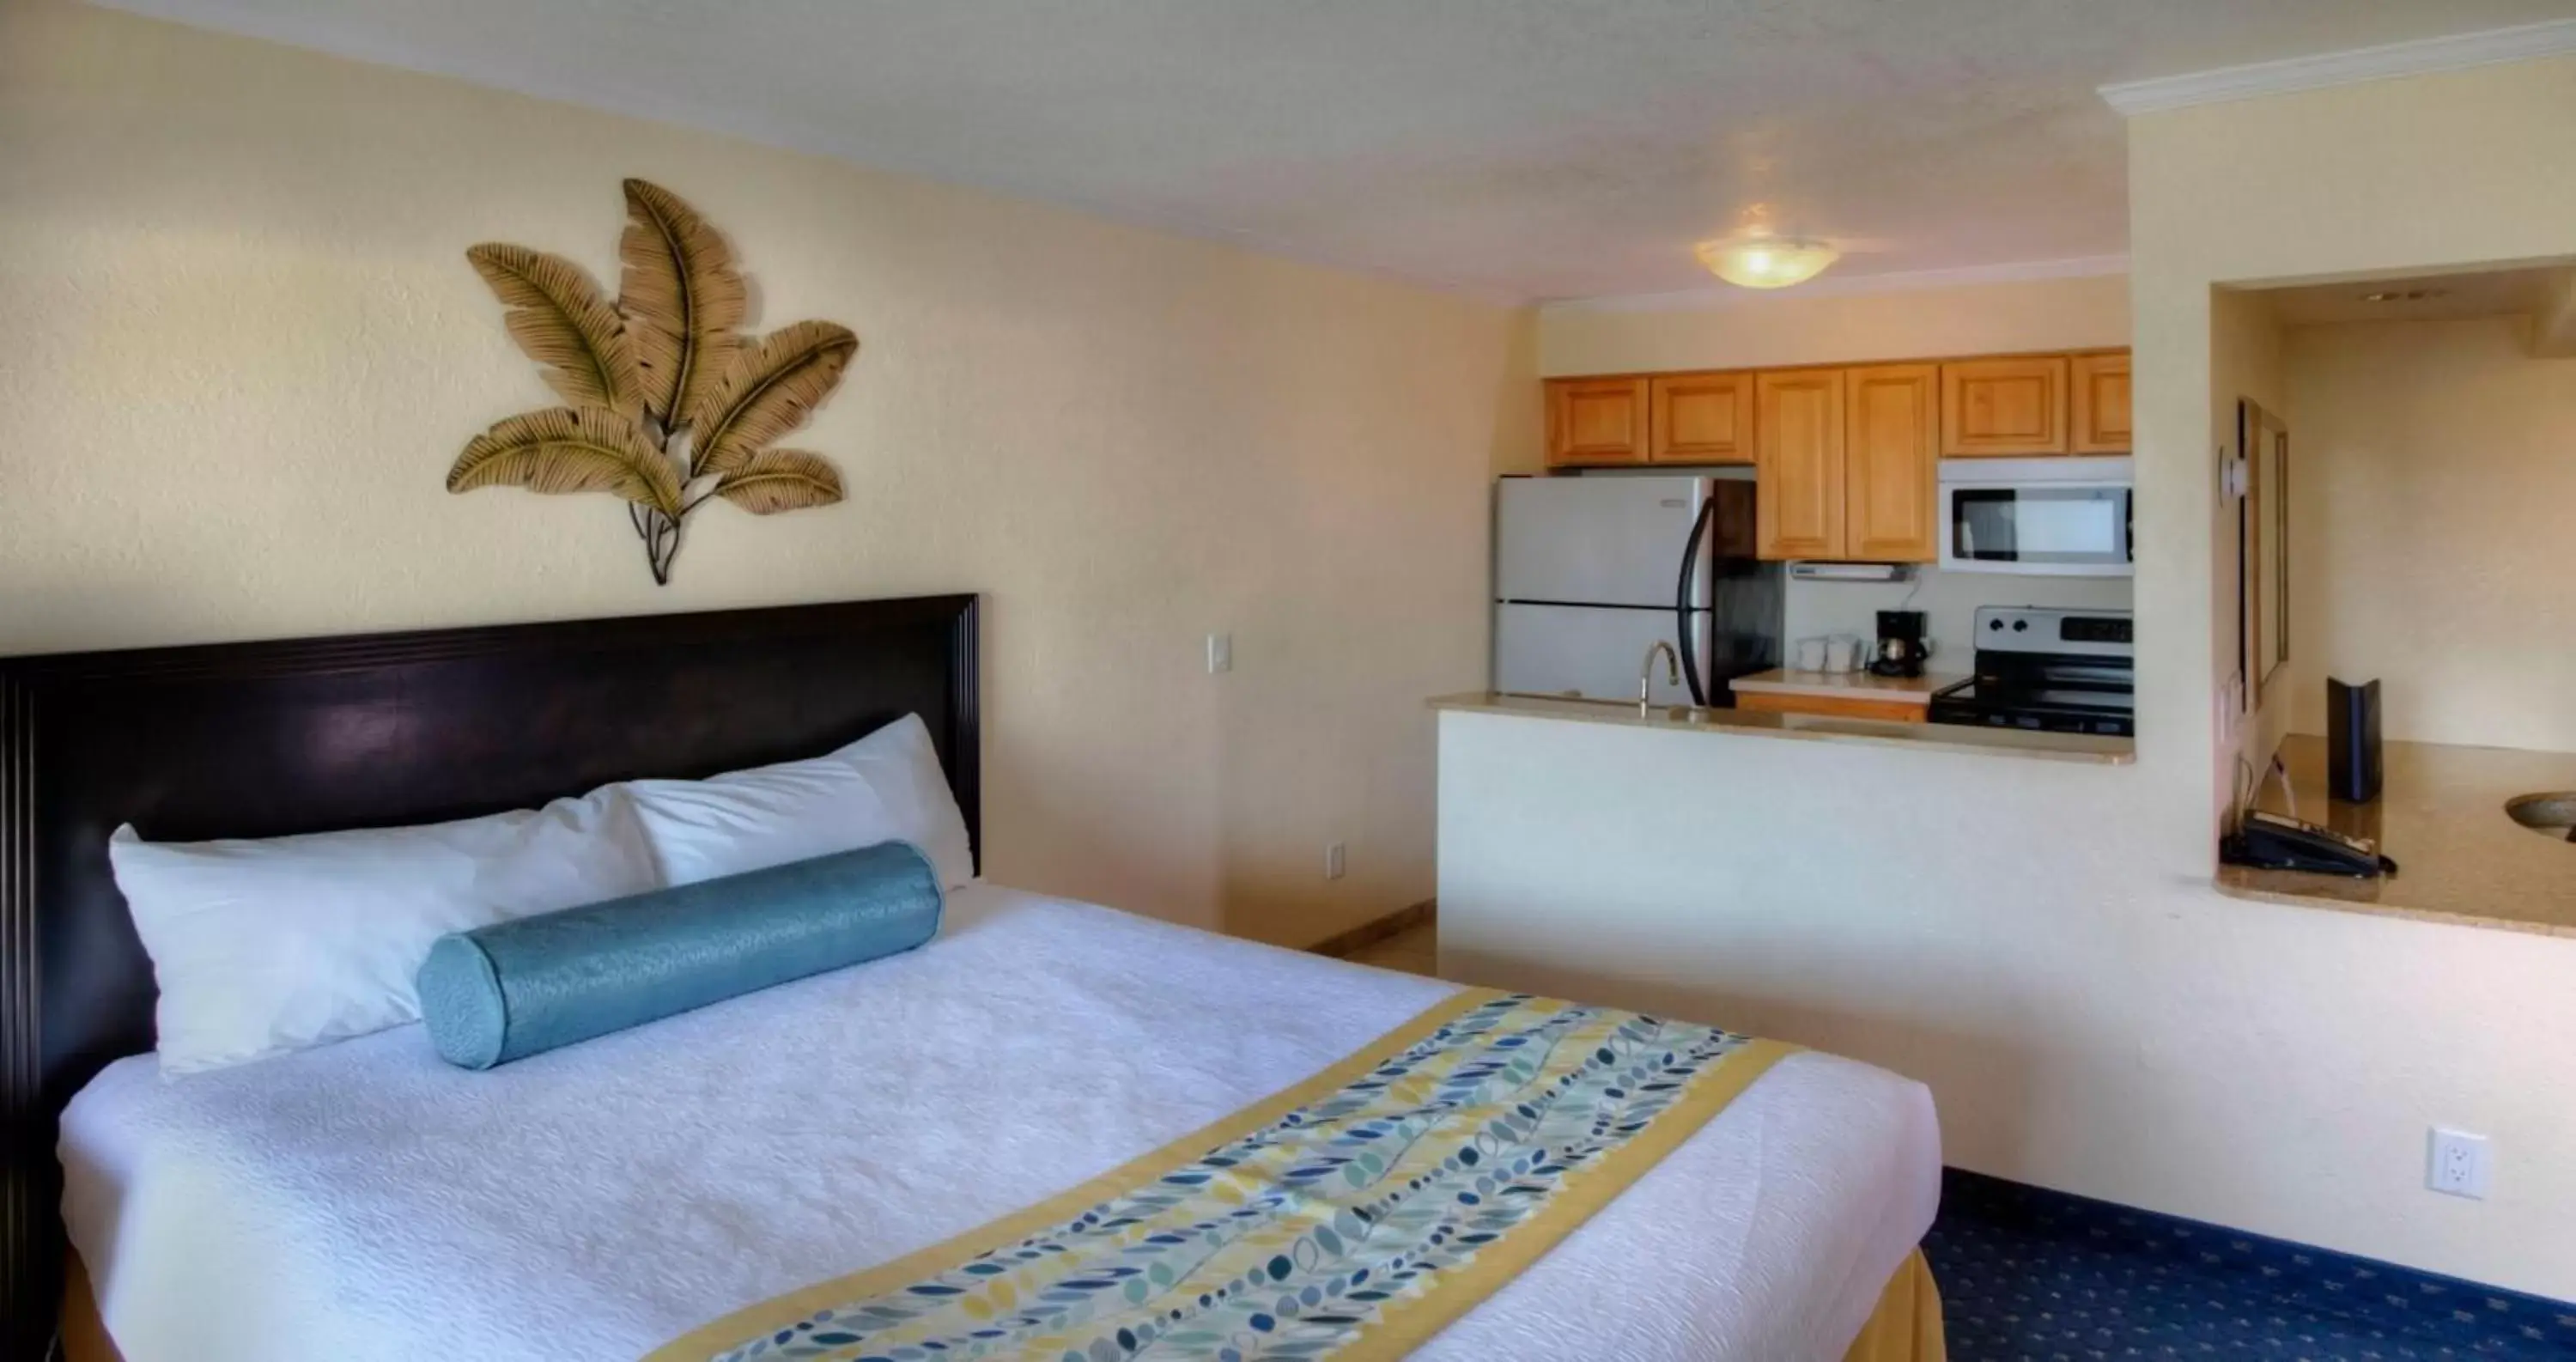 Bed, Room Photo in Sailport Waterfront Suites